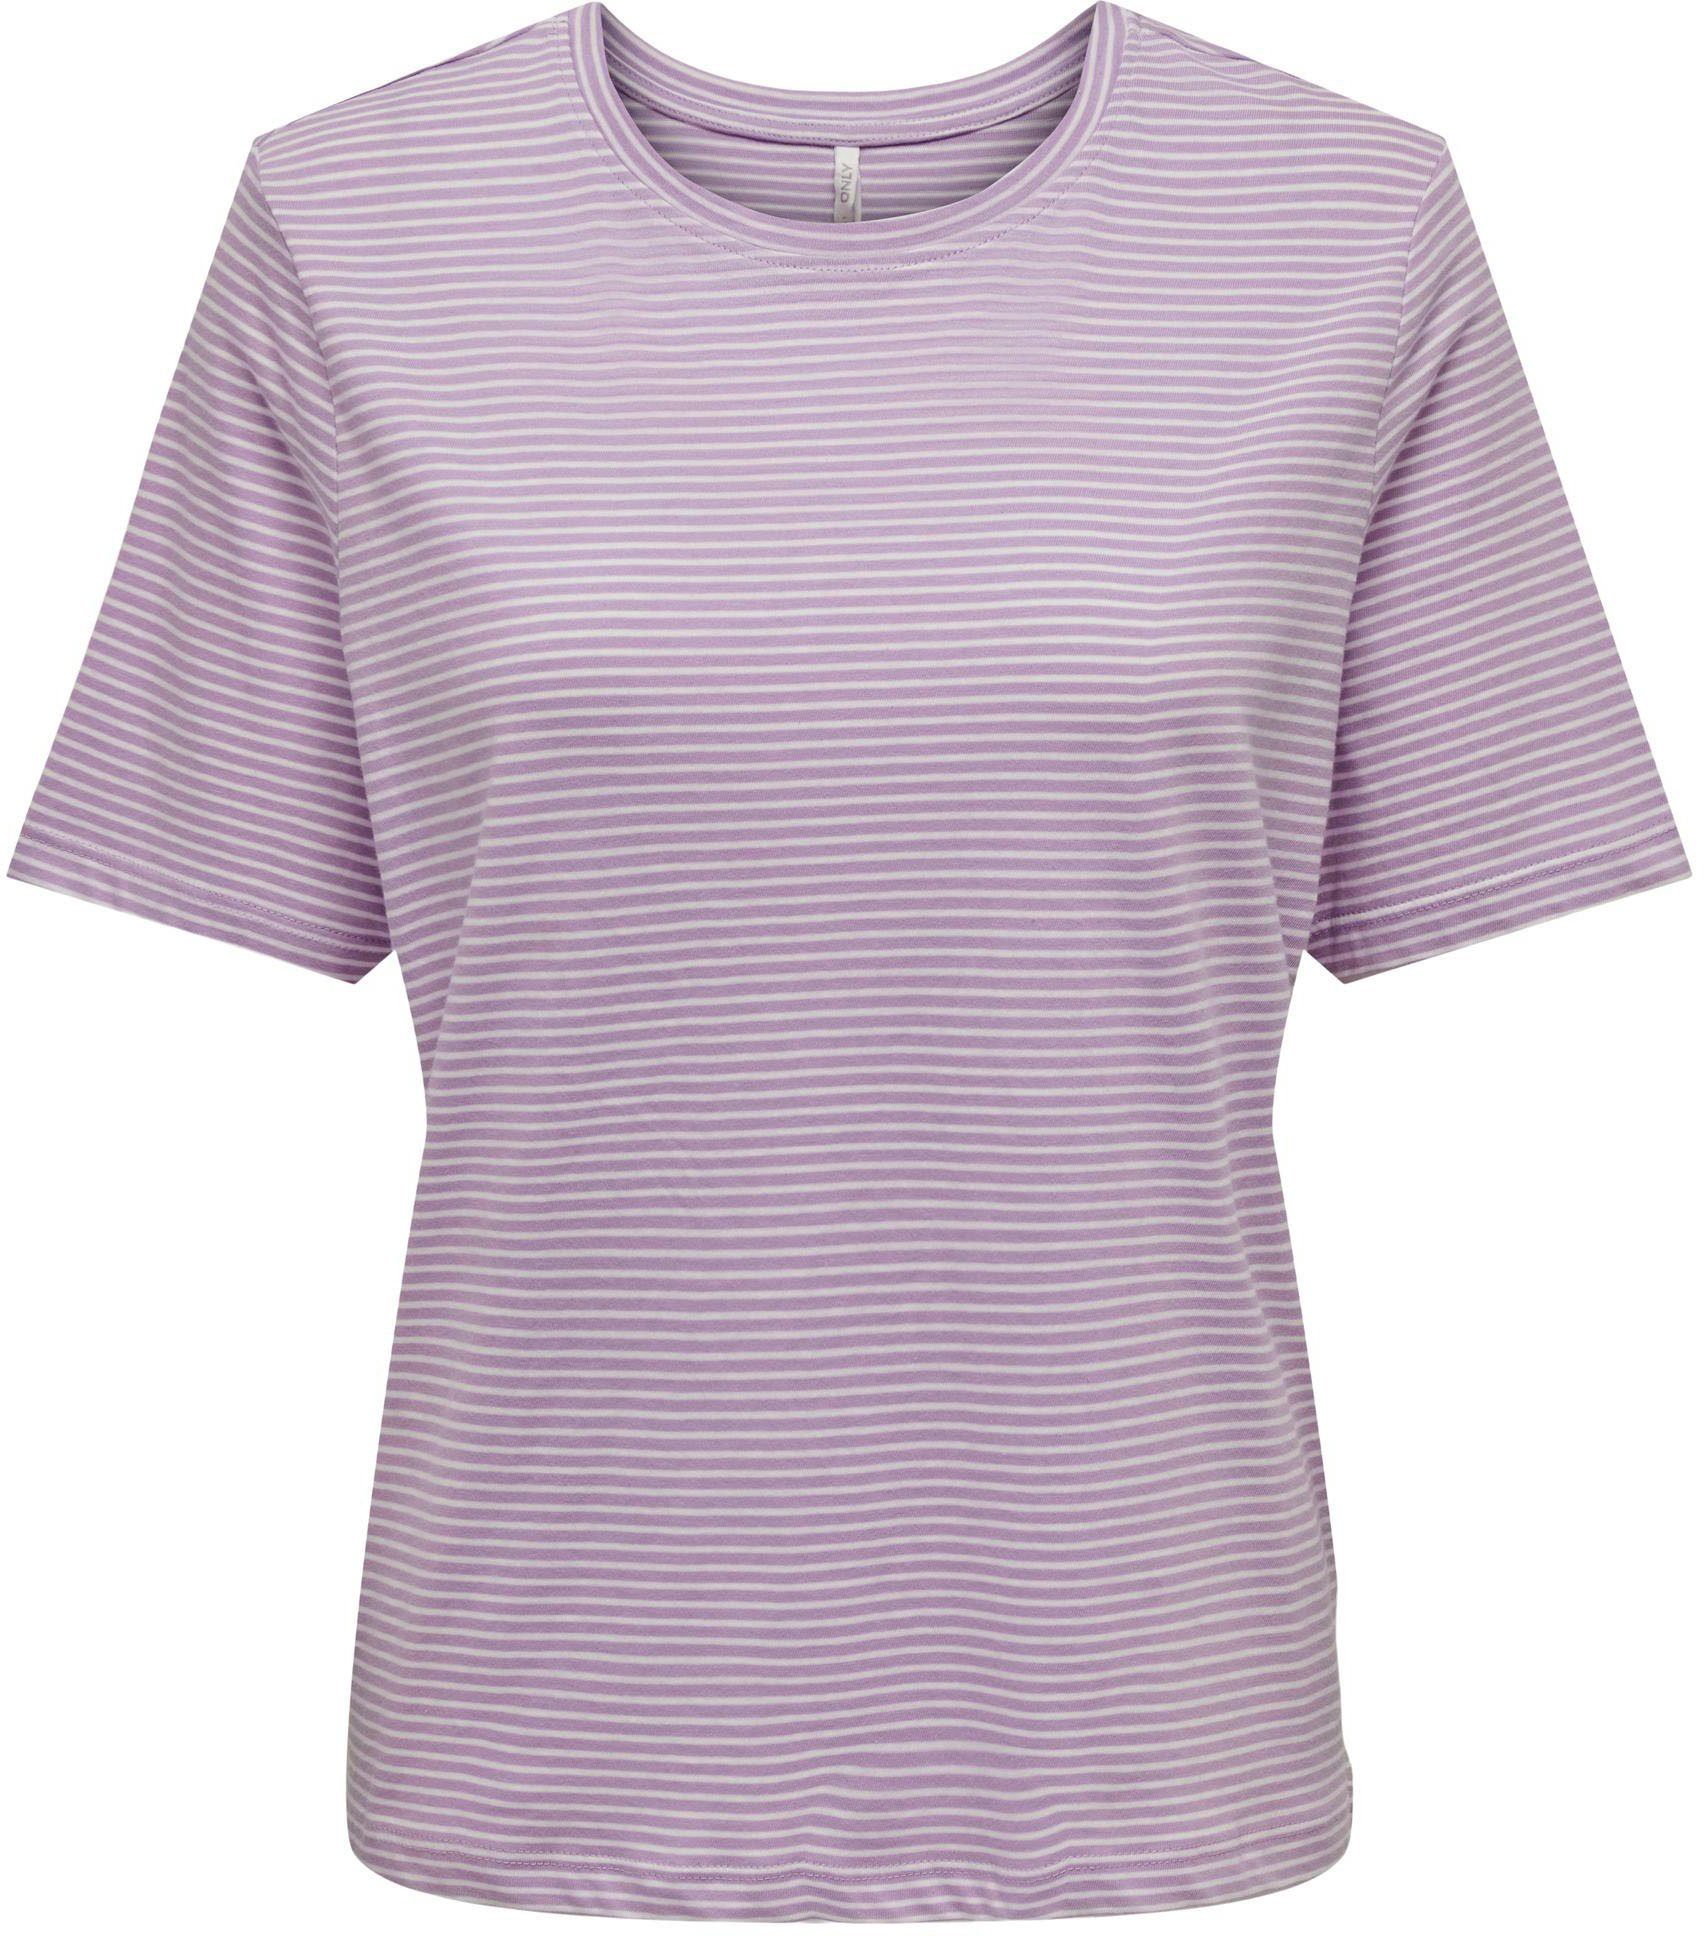 [Sofort lieferbar] ONLY Kurzarmshirt ONLMAY S/S O-NECK Purple REG Rose TOP JRS Stripes BOX